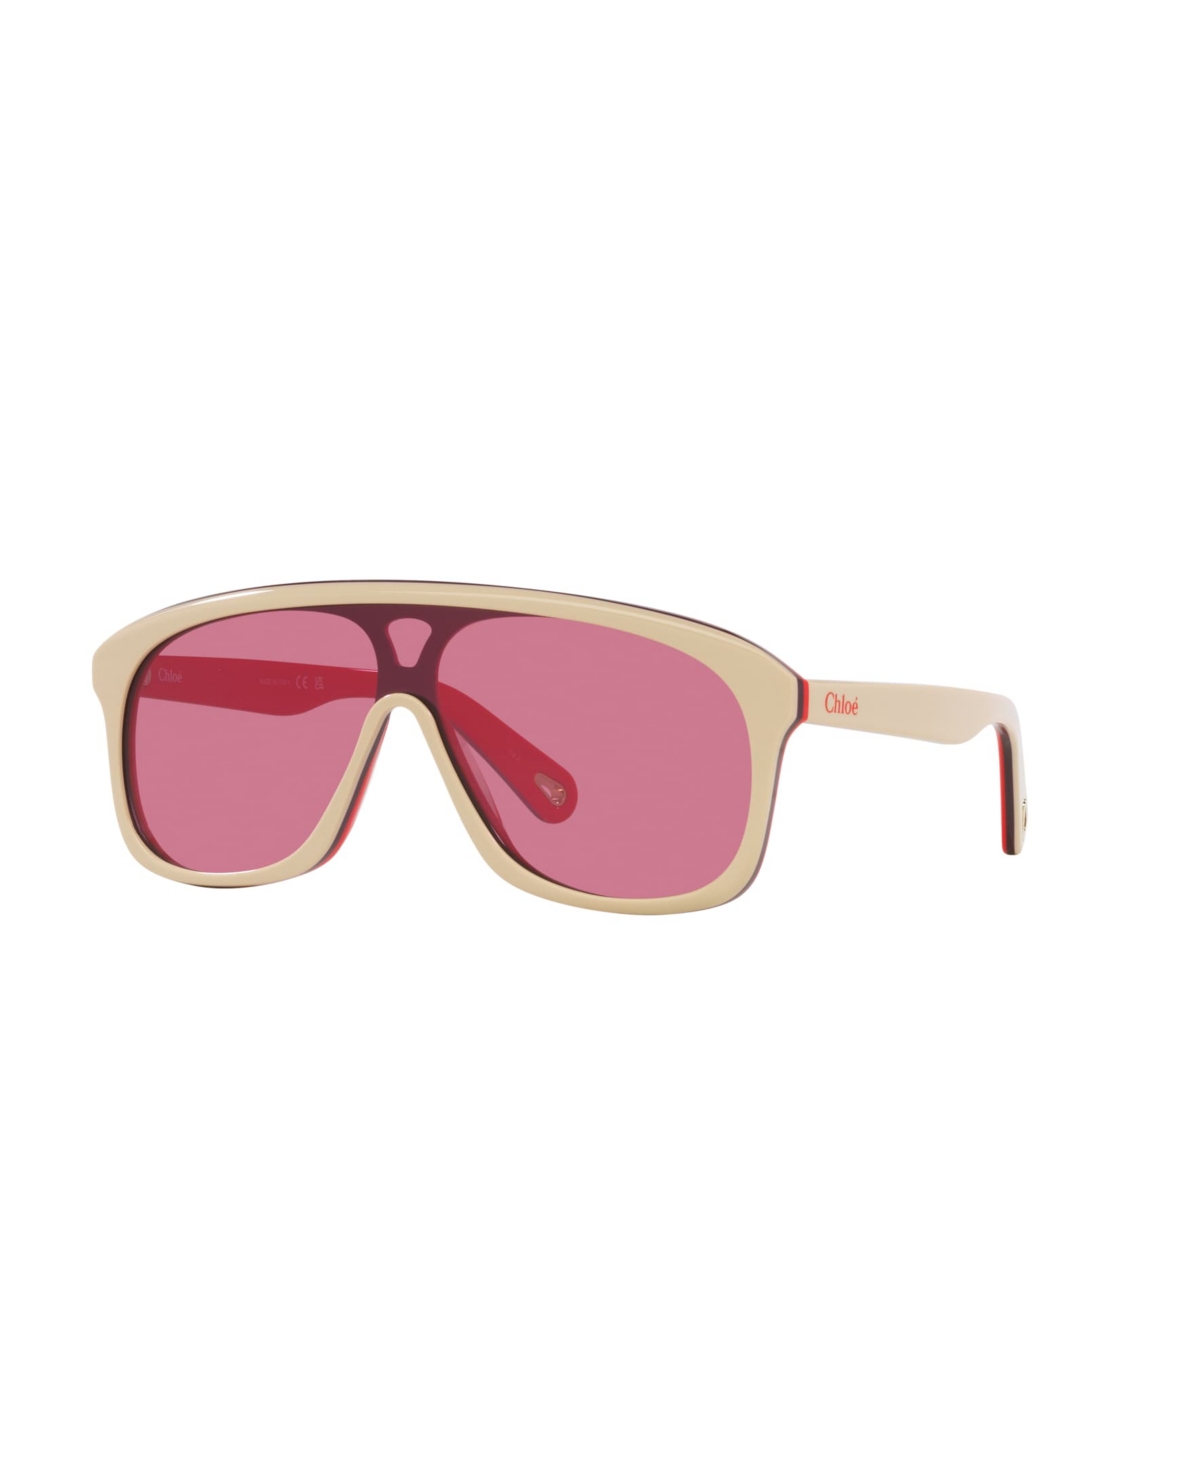 Chloé Women's Sunglasses, Ch0212s In Pink